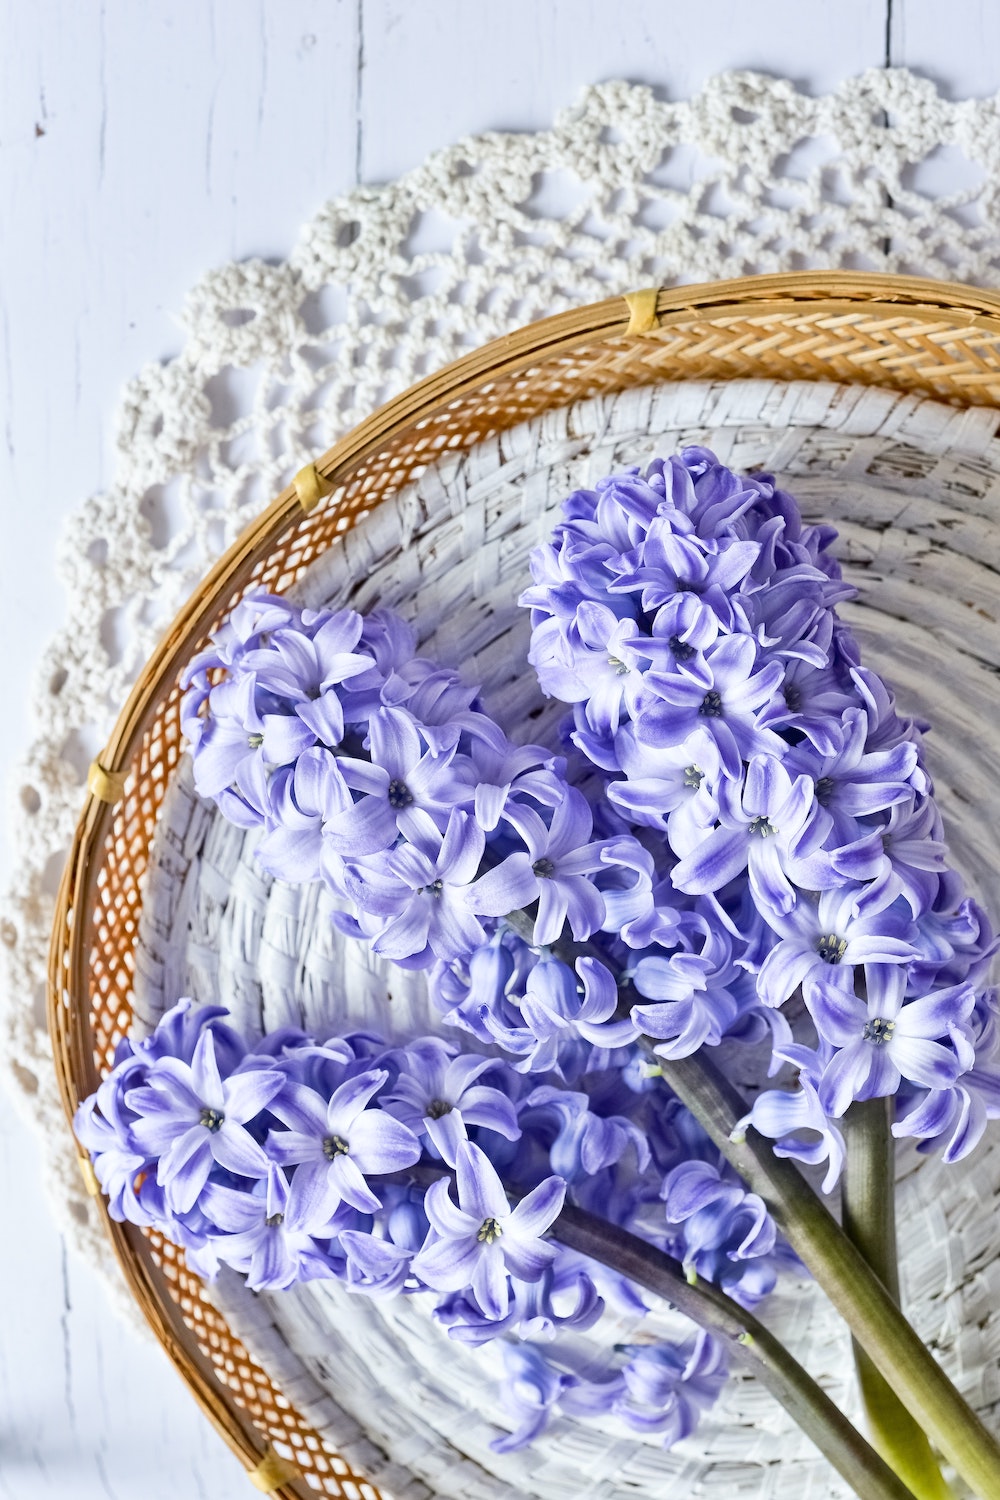 The meaning of hyacinthus in Greek mythology - on Thursd